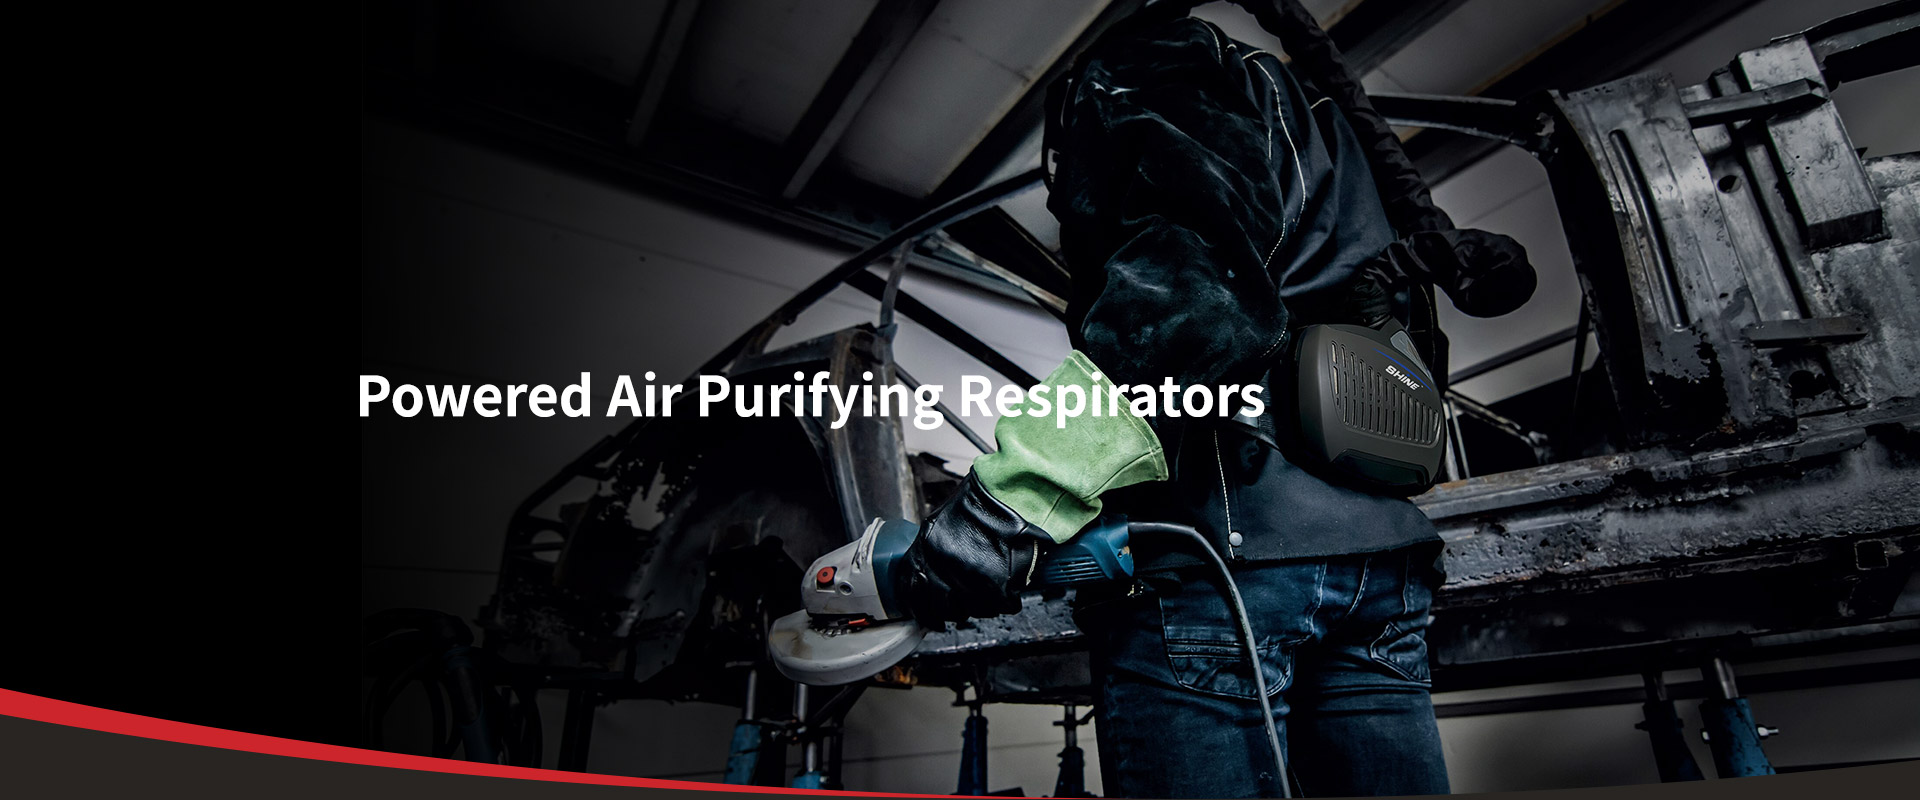 Powered Air Purifying Respirators